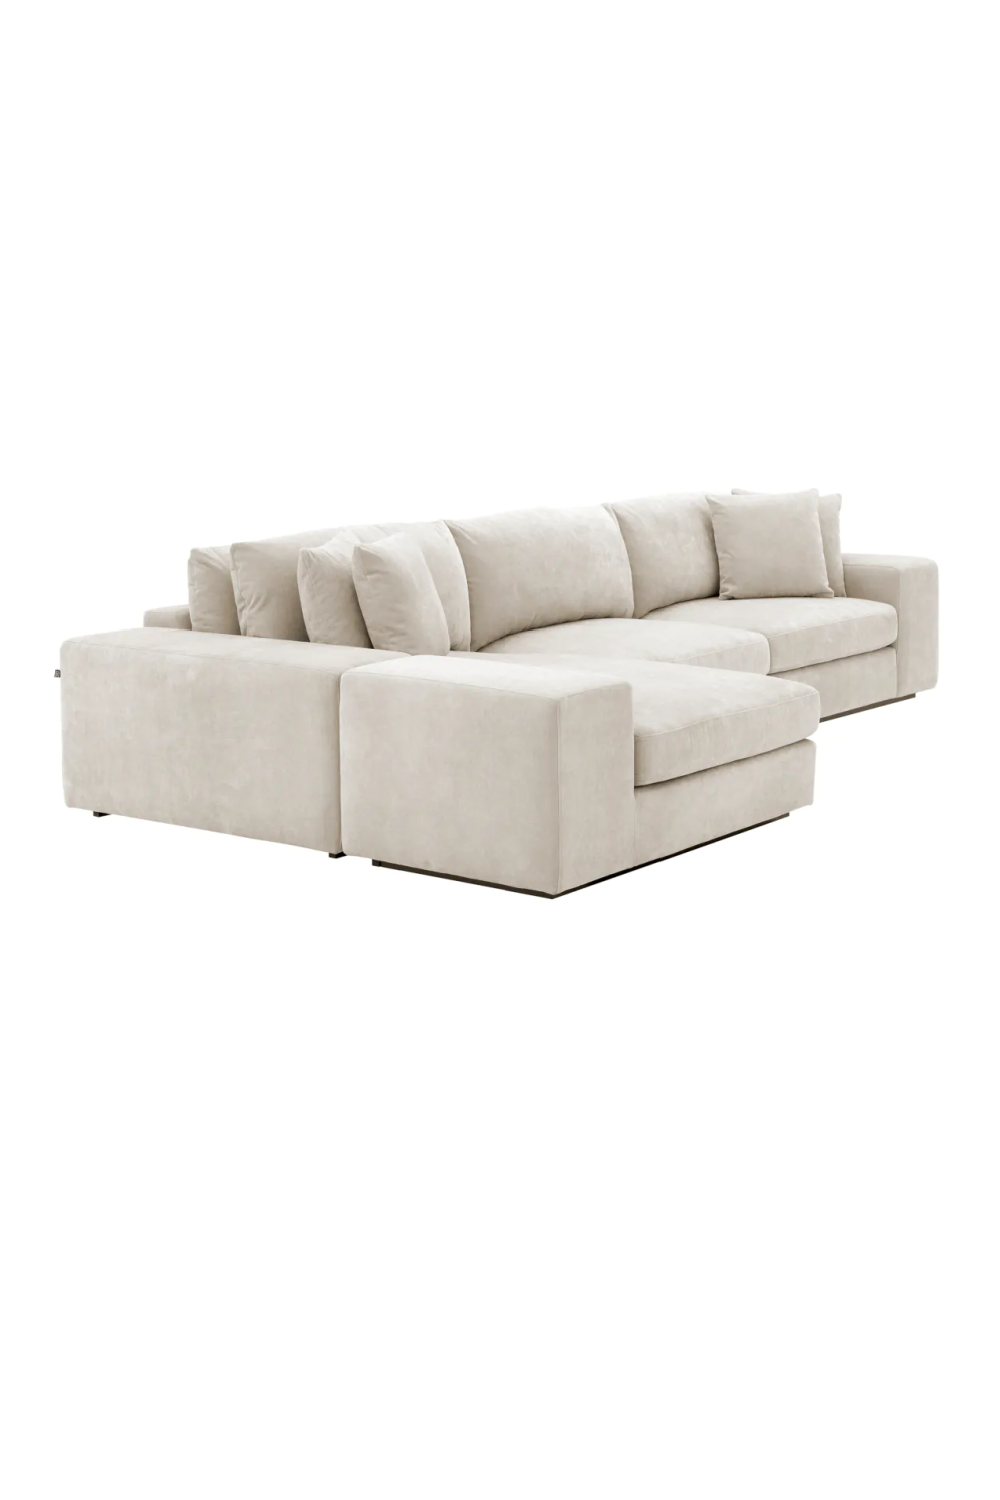 Beige Modular Lounge Sofa | Eichholtz Vista Grande | Oroa.com